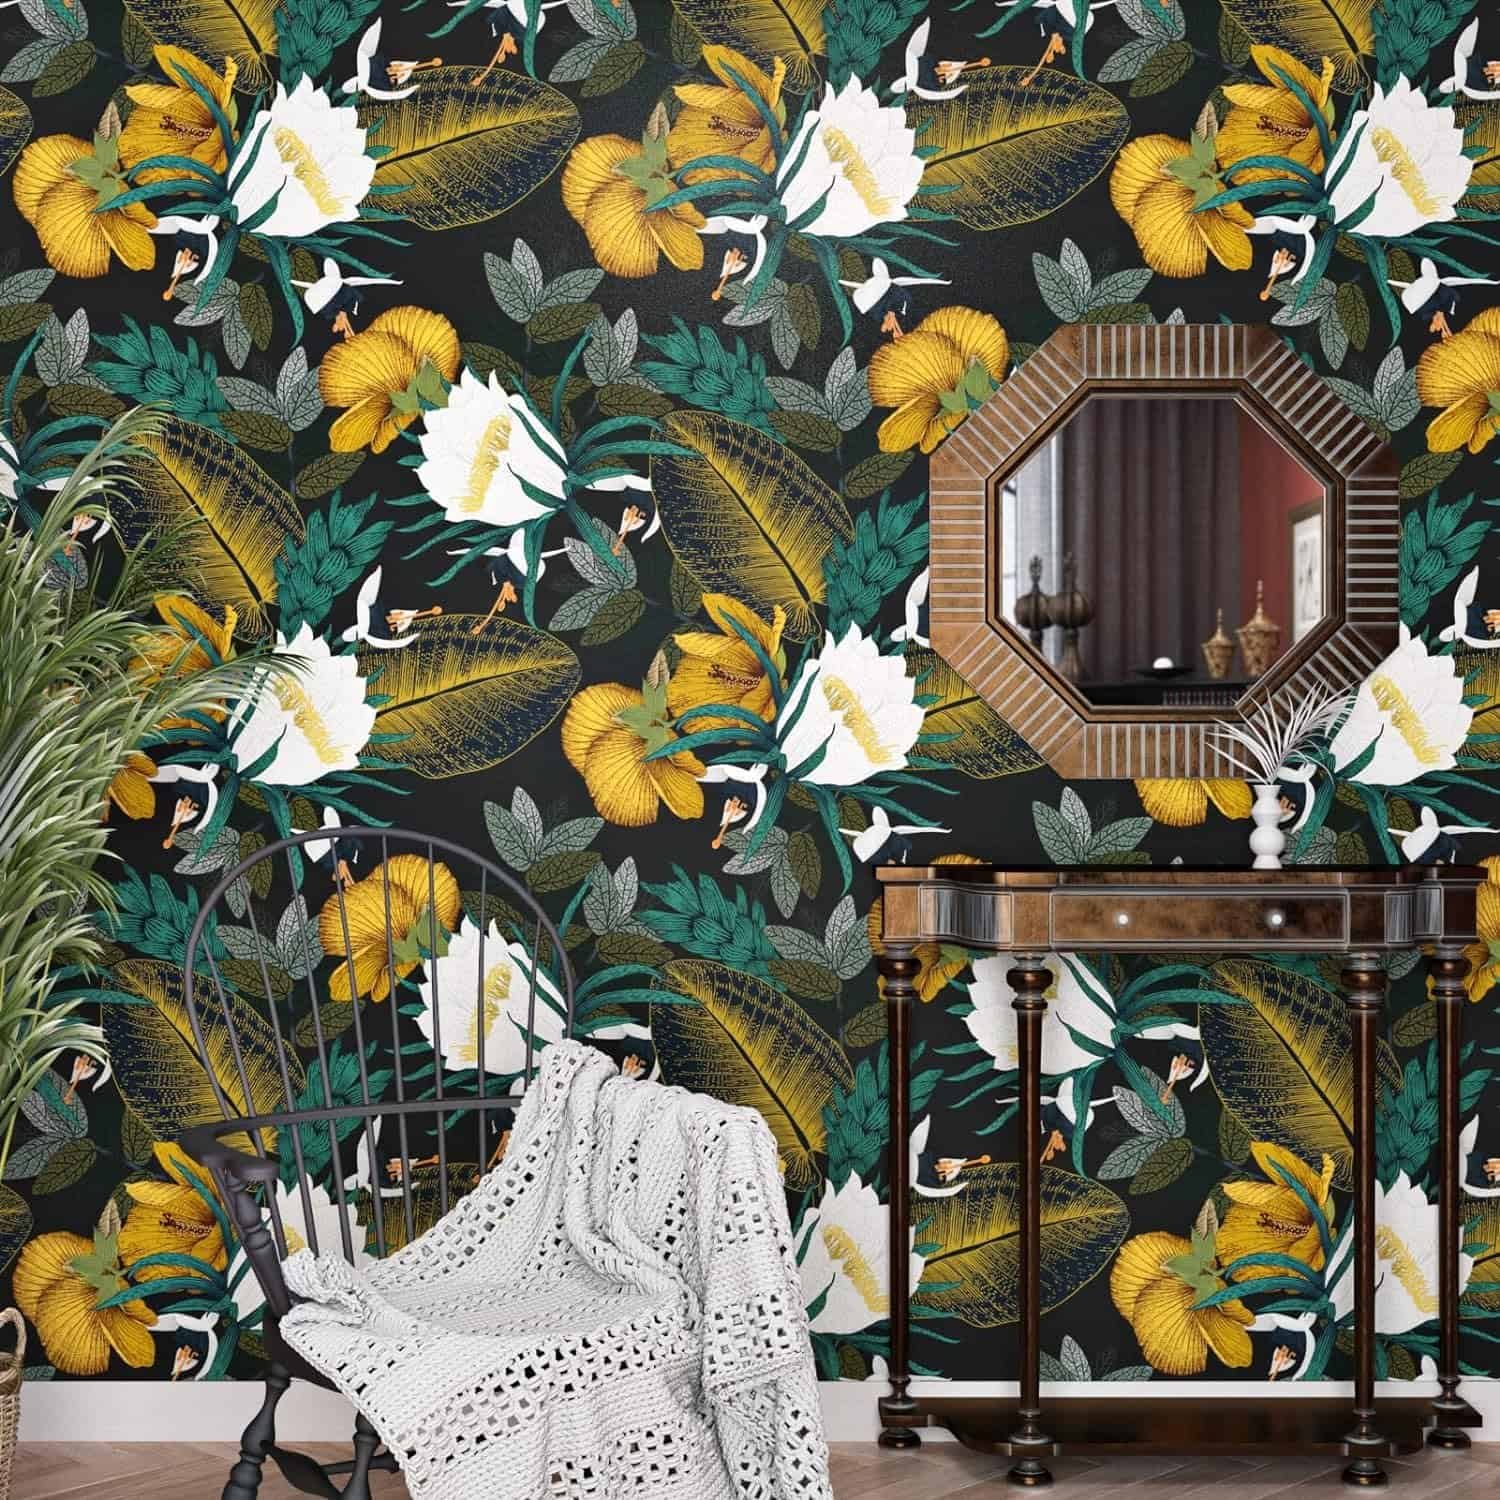 Botanical style wallpaper